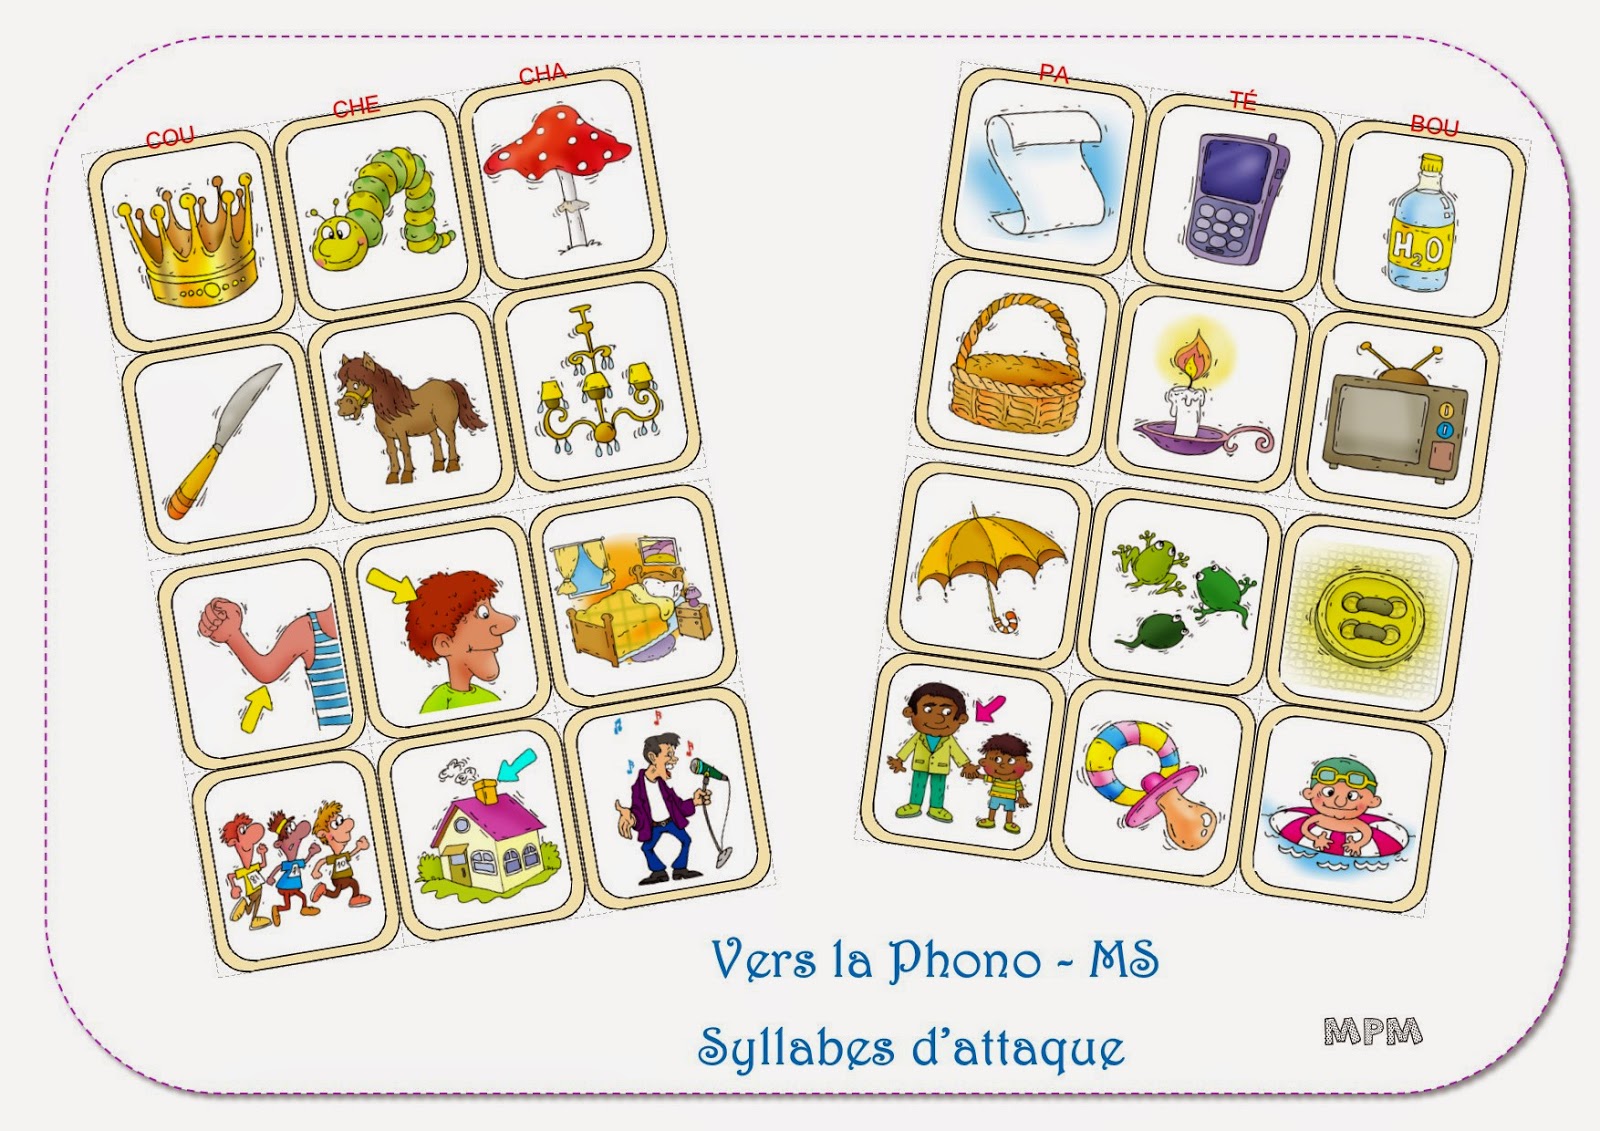 Phonologie MS jeu de syllabes